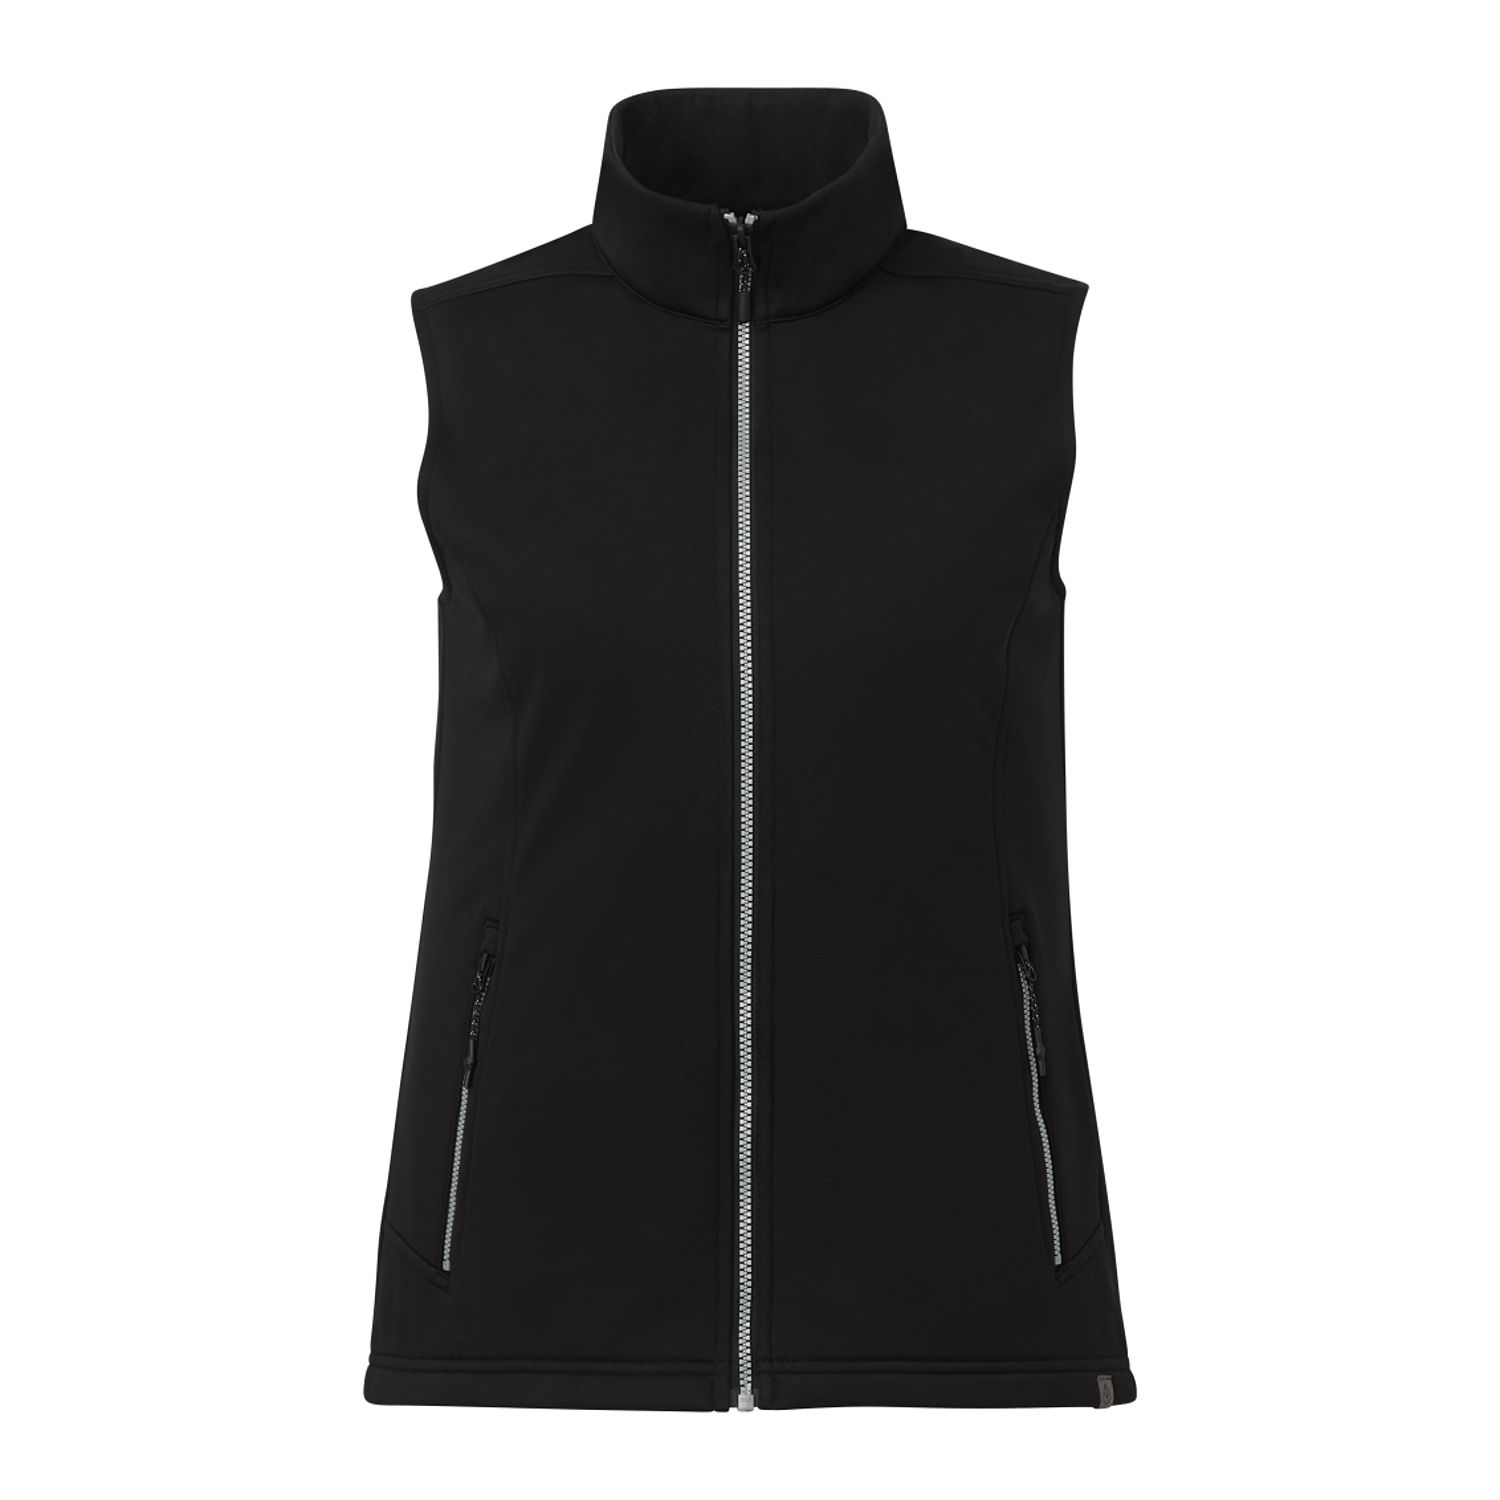 Trimark TM92505 - Women's JORIS Eco Softshell Vest